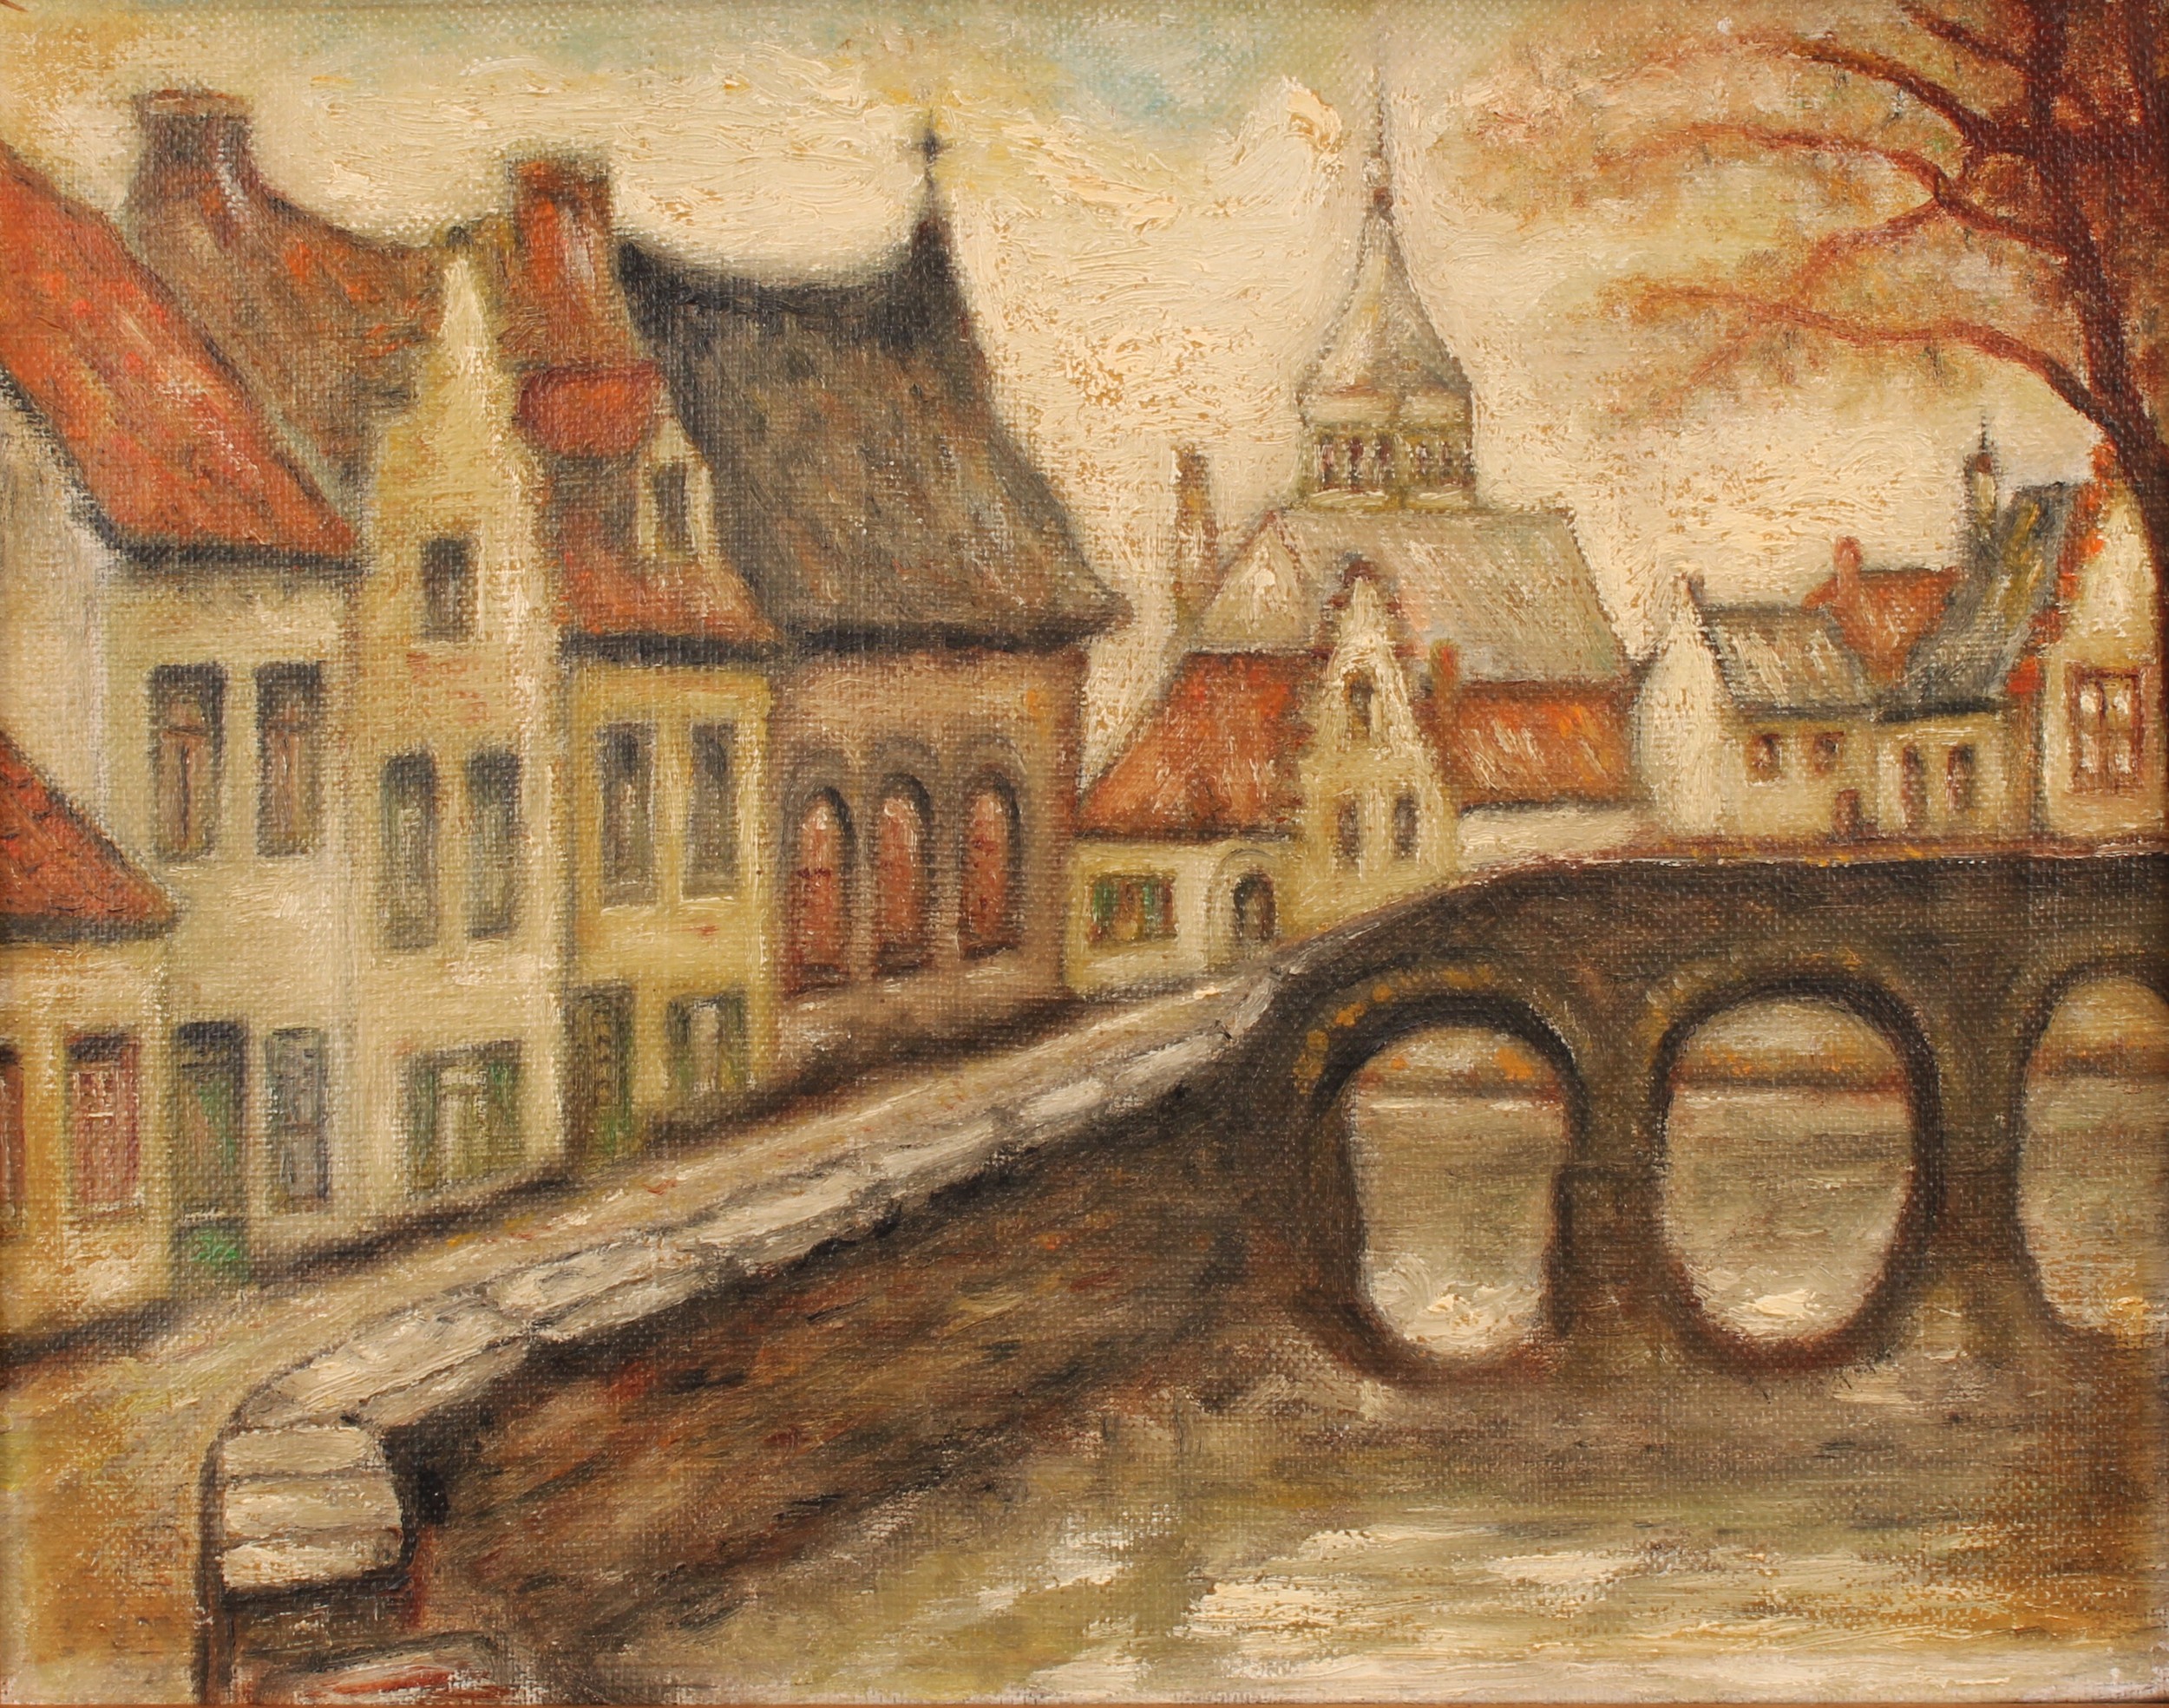 Continental School (20th century) A Quiet Town, oil on canvas, 21cm x 26.5cm